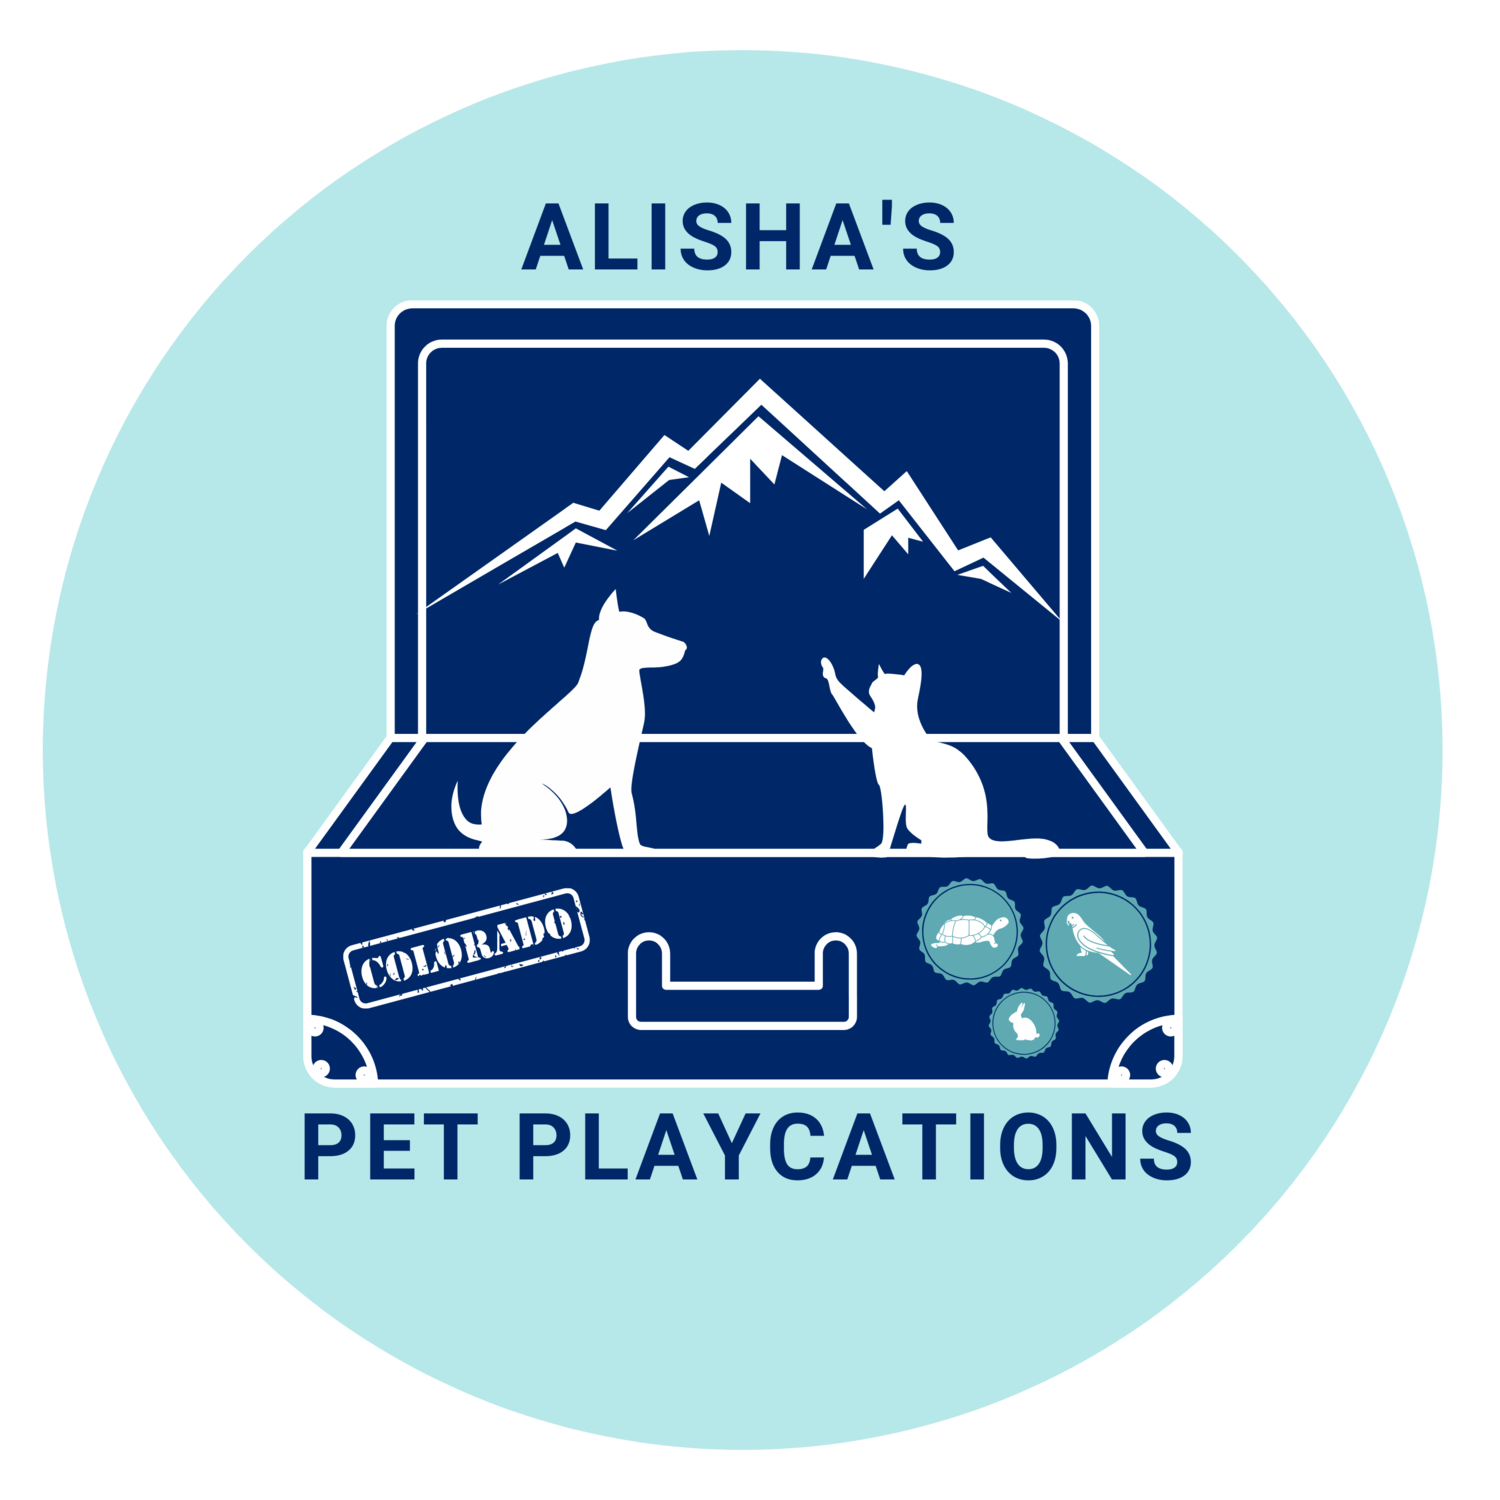 Alisha's Pet Playcations